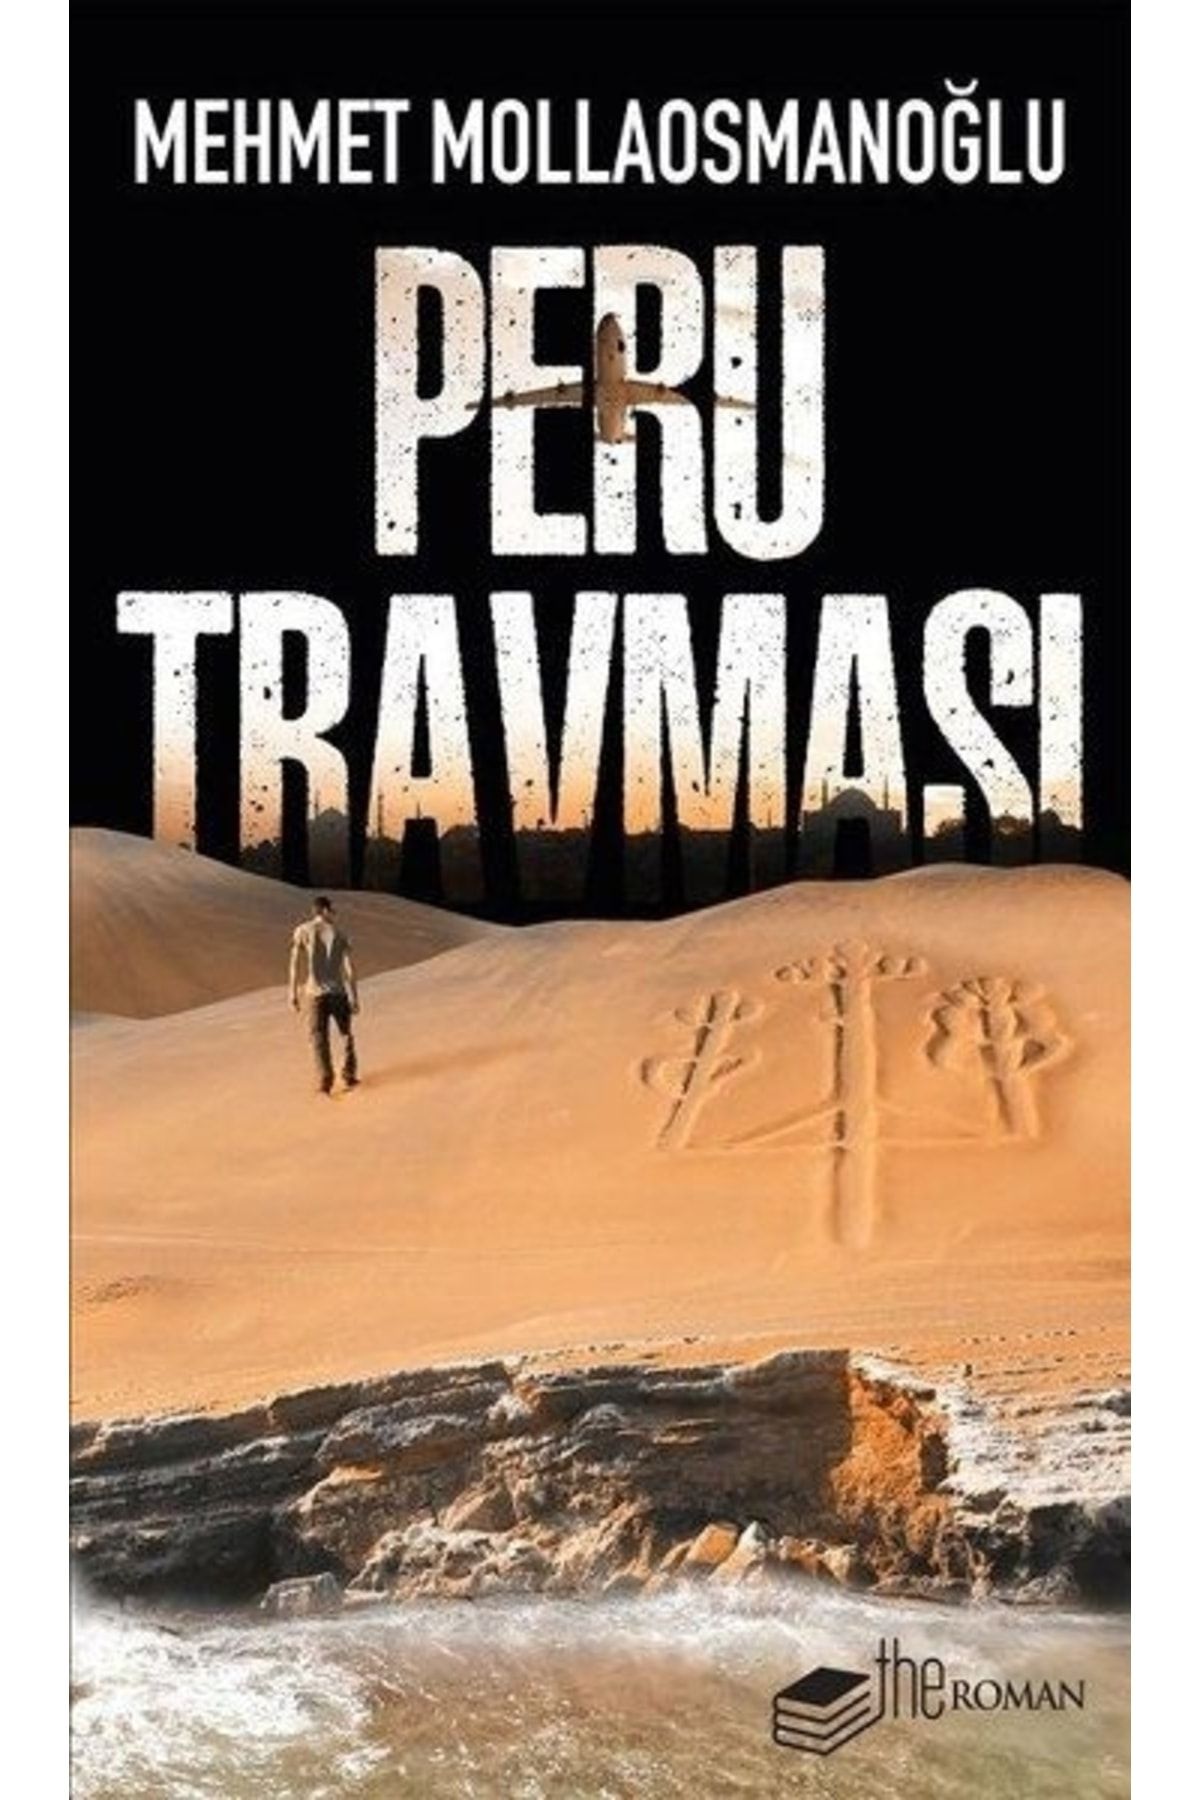 The Roman (kitap) Peru Travması